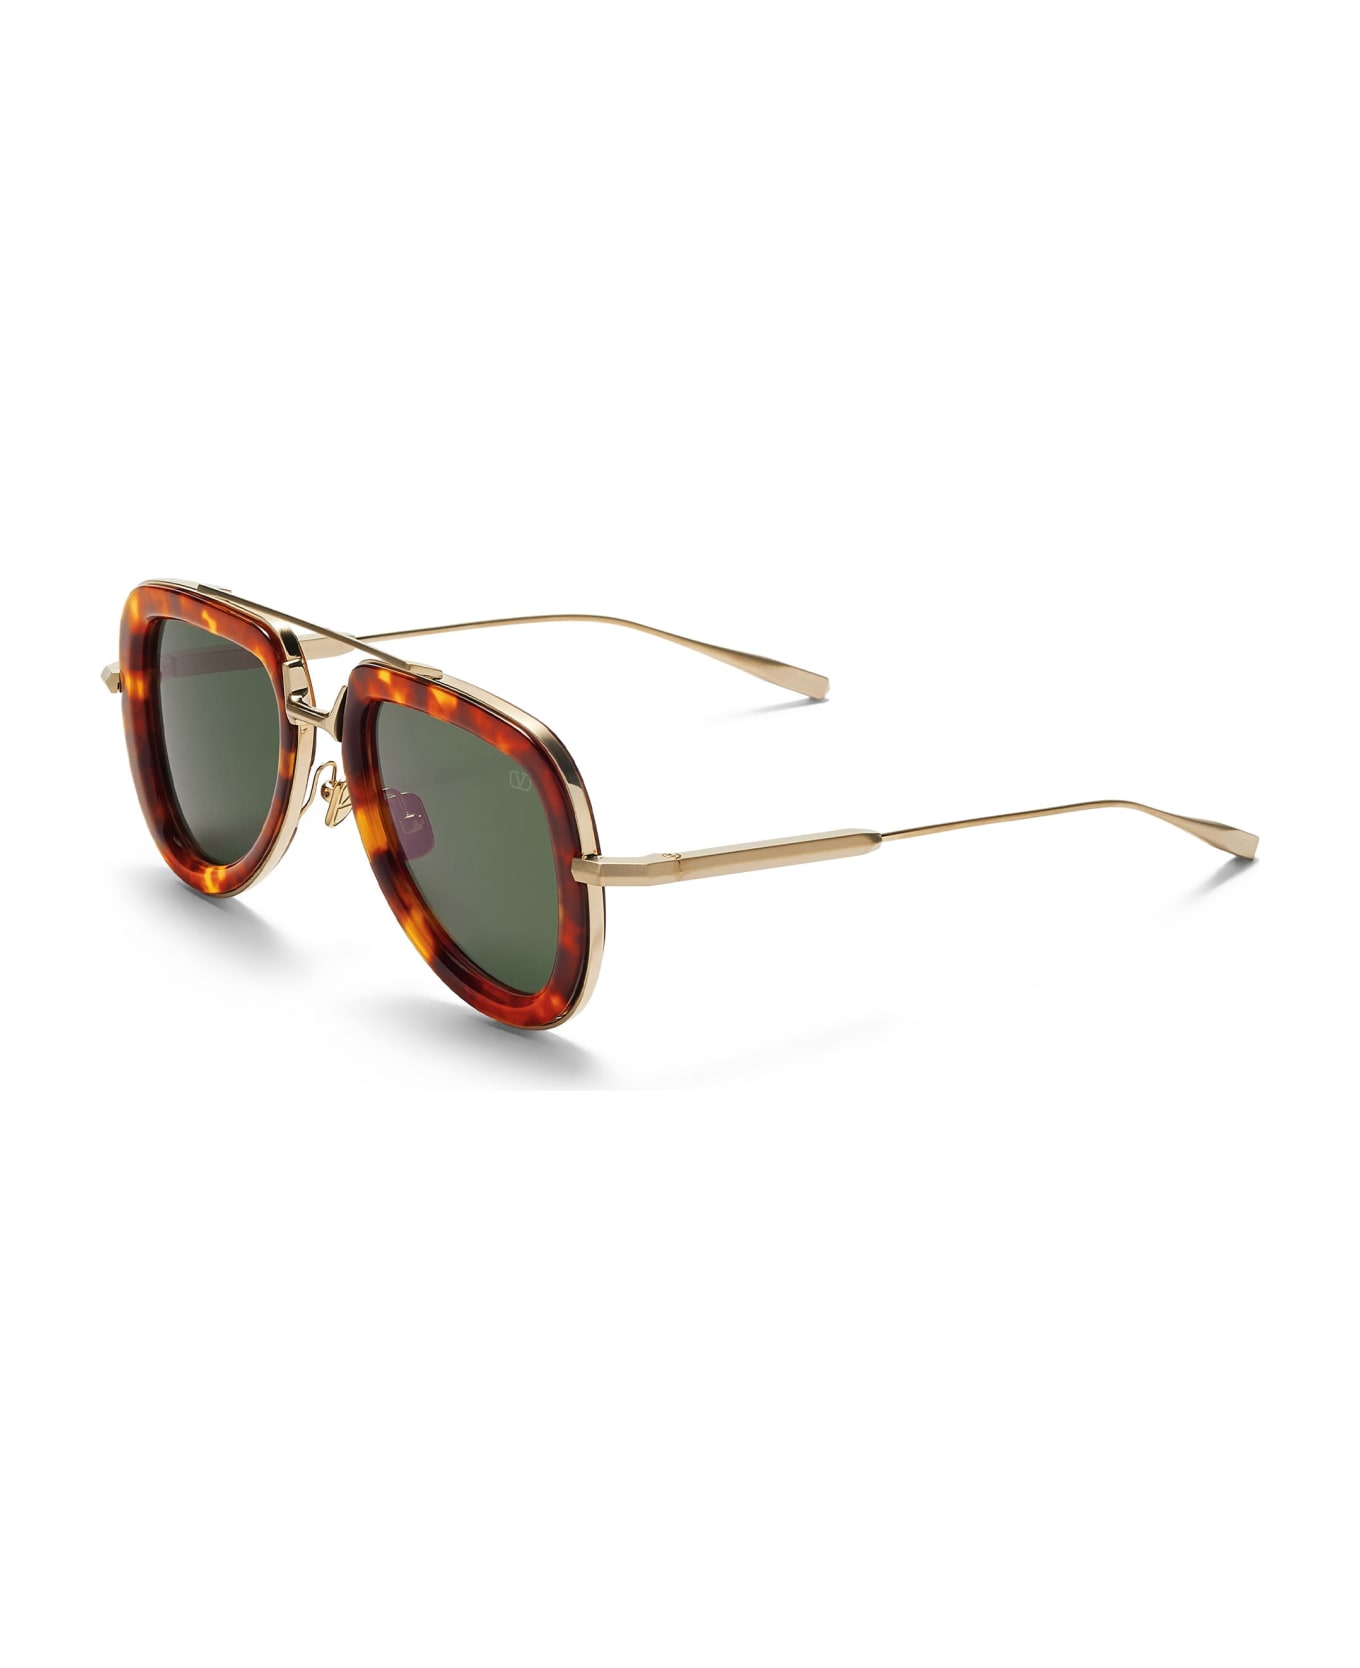 Valentino Eyewear V-lstory - Honey Tortoise / Light Gold Sunglasses - Gold